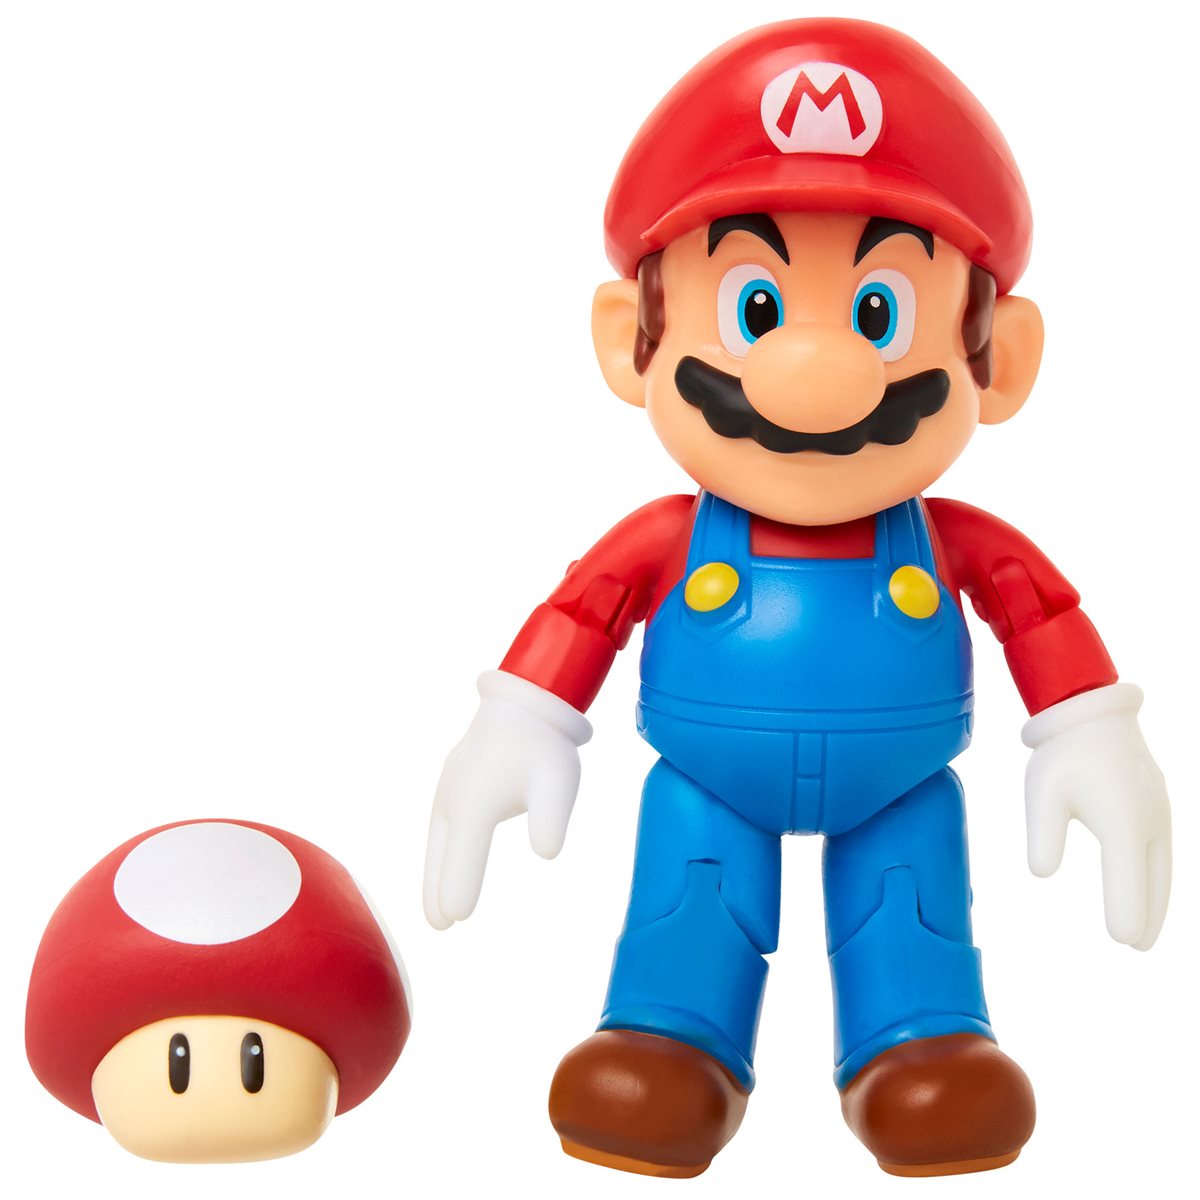 Super Mario Craft Kit 4ct – Toy World Inc